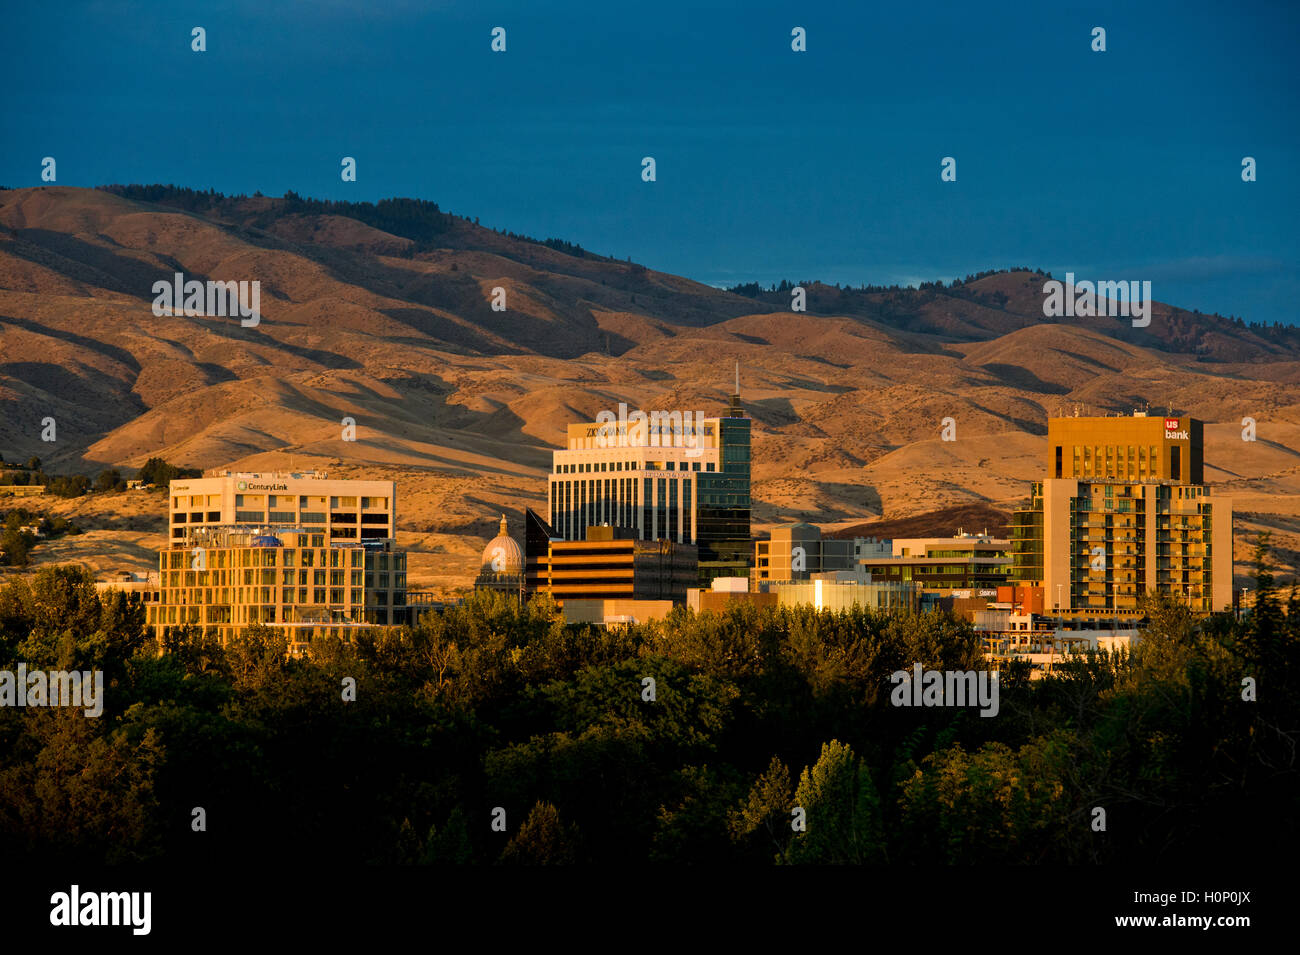 Boise Idaho skyline against foothills at sunset on Sept 2, 2016 Stock Photo